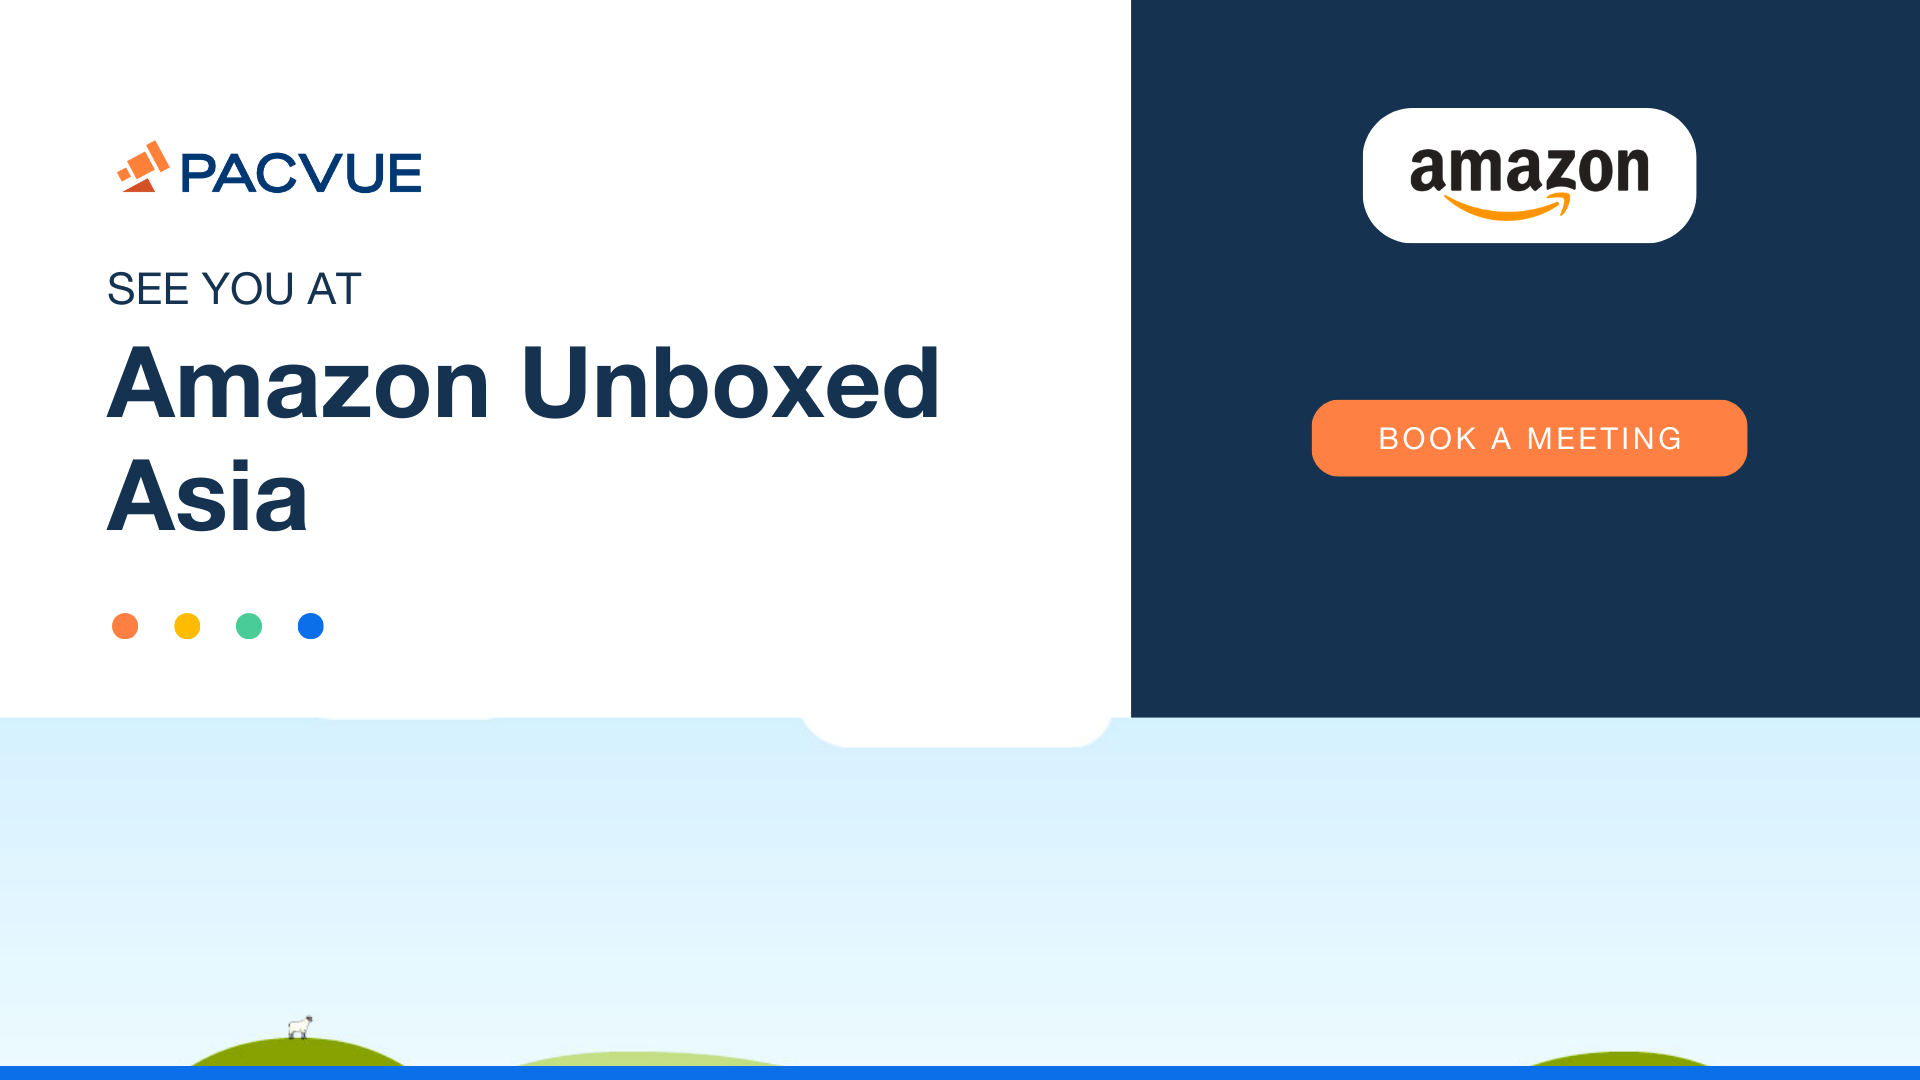 Amazon Unboxed Asia